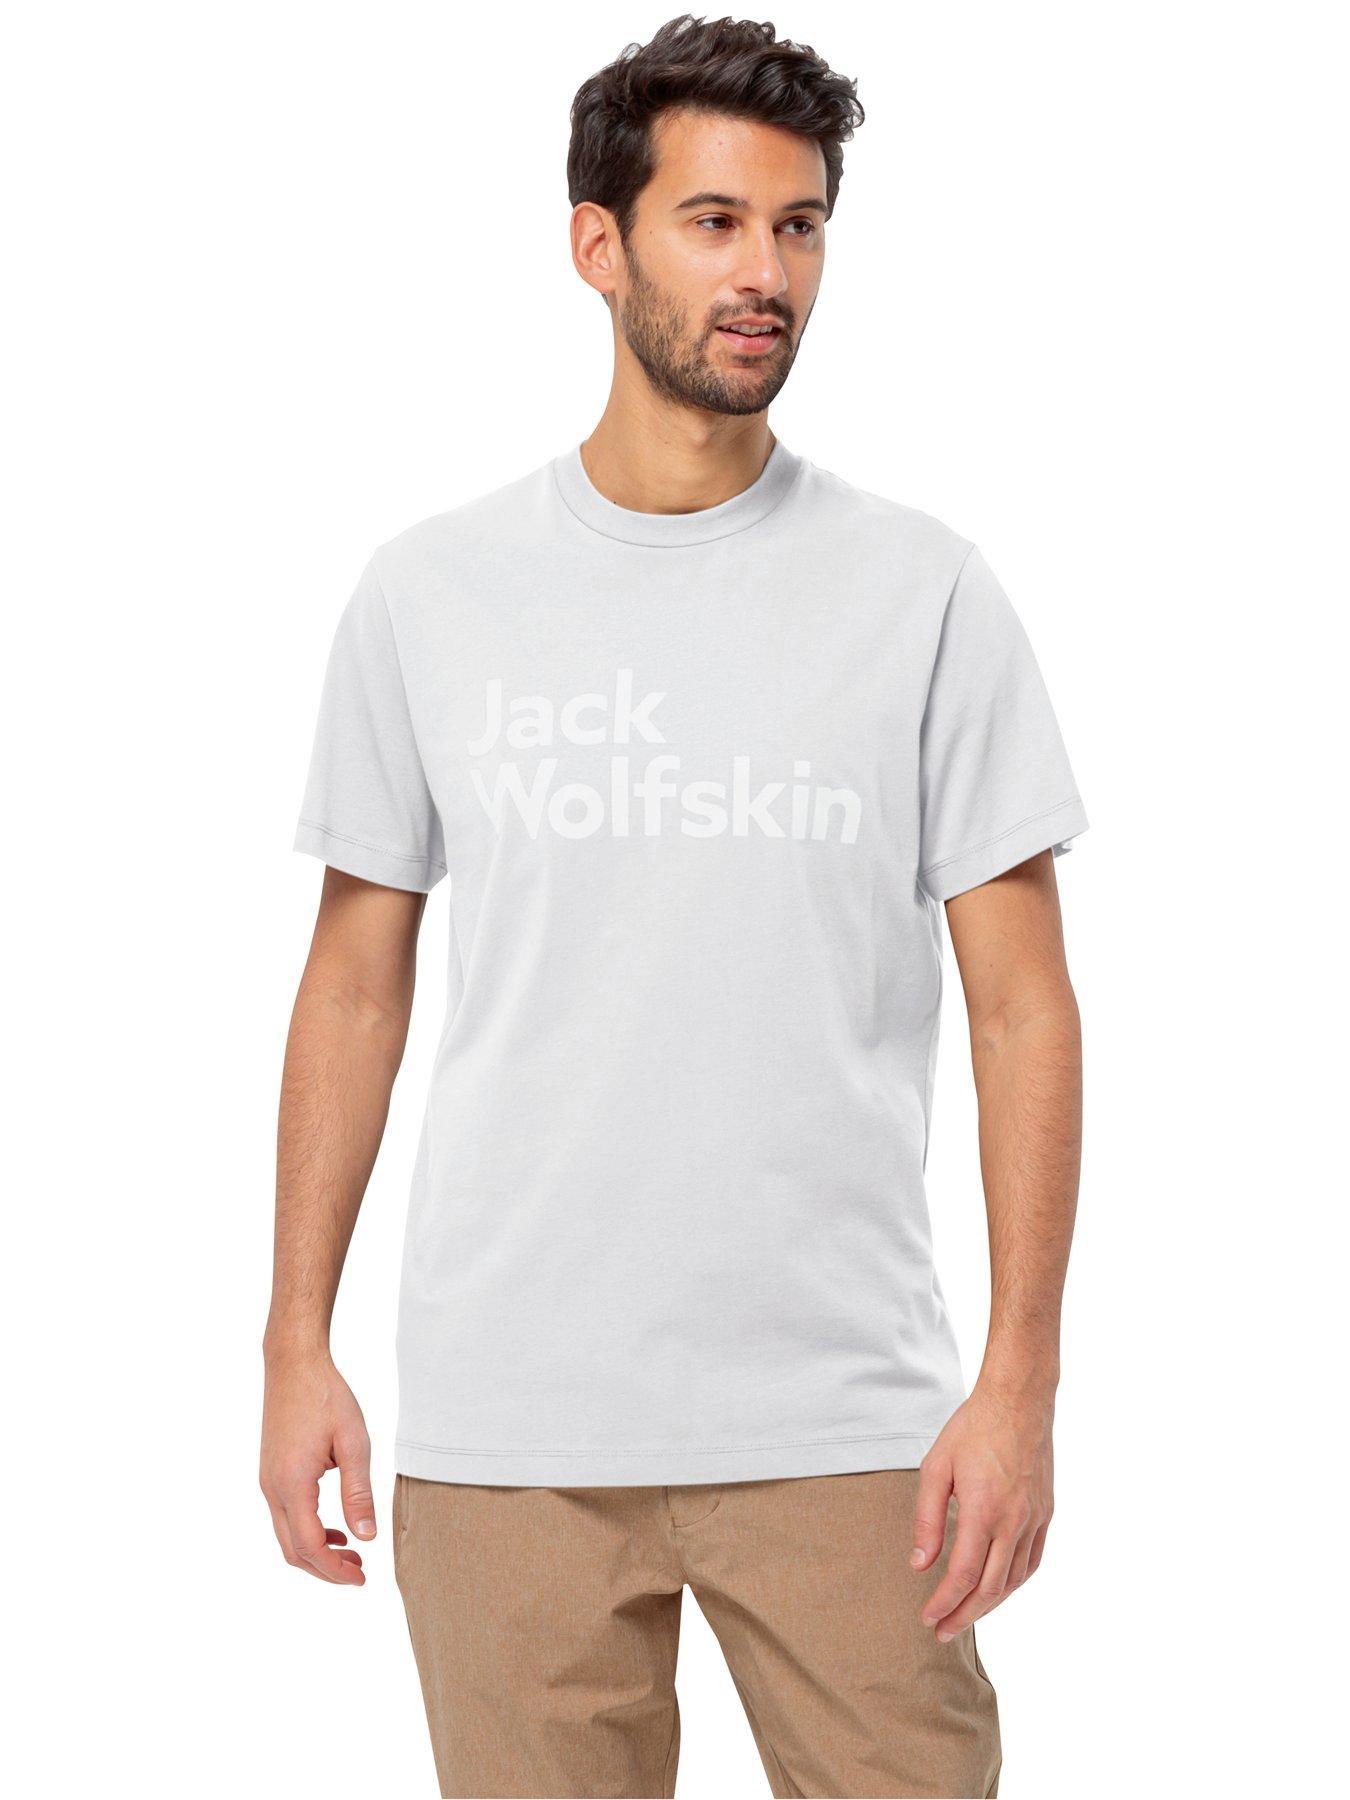 M | Jack wolfskin | polos | | T-shirts Very Ireland & Men